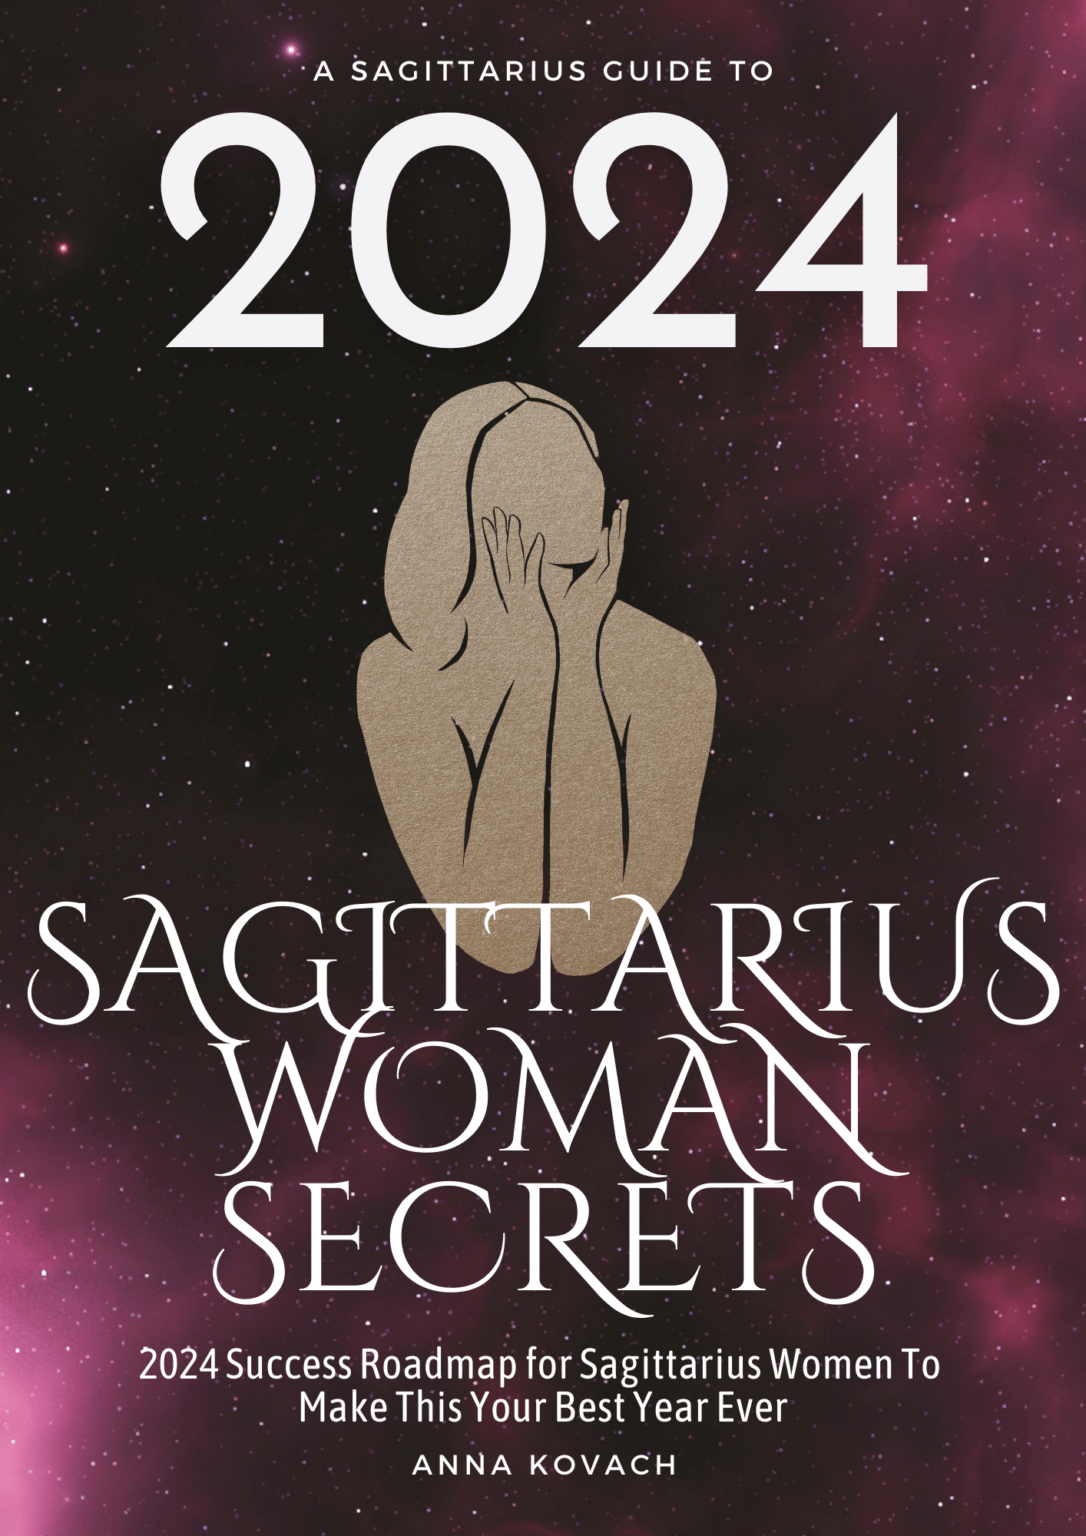 Sagittarius Woman Secrets 2024 Cover 1086x1536 